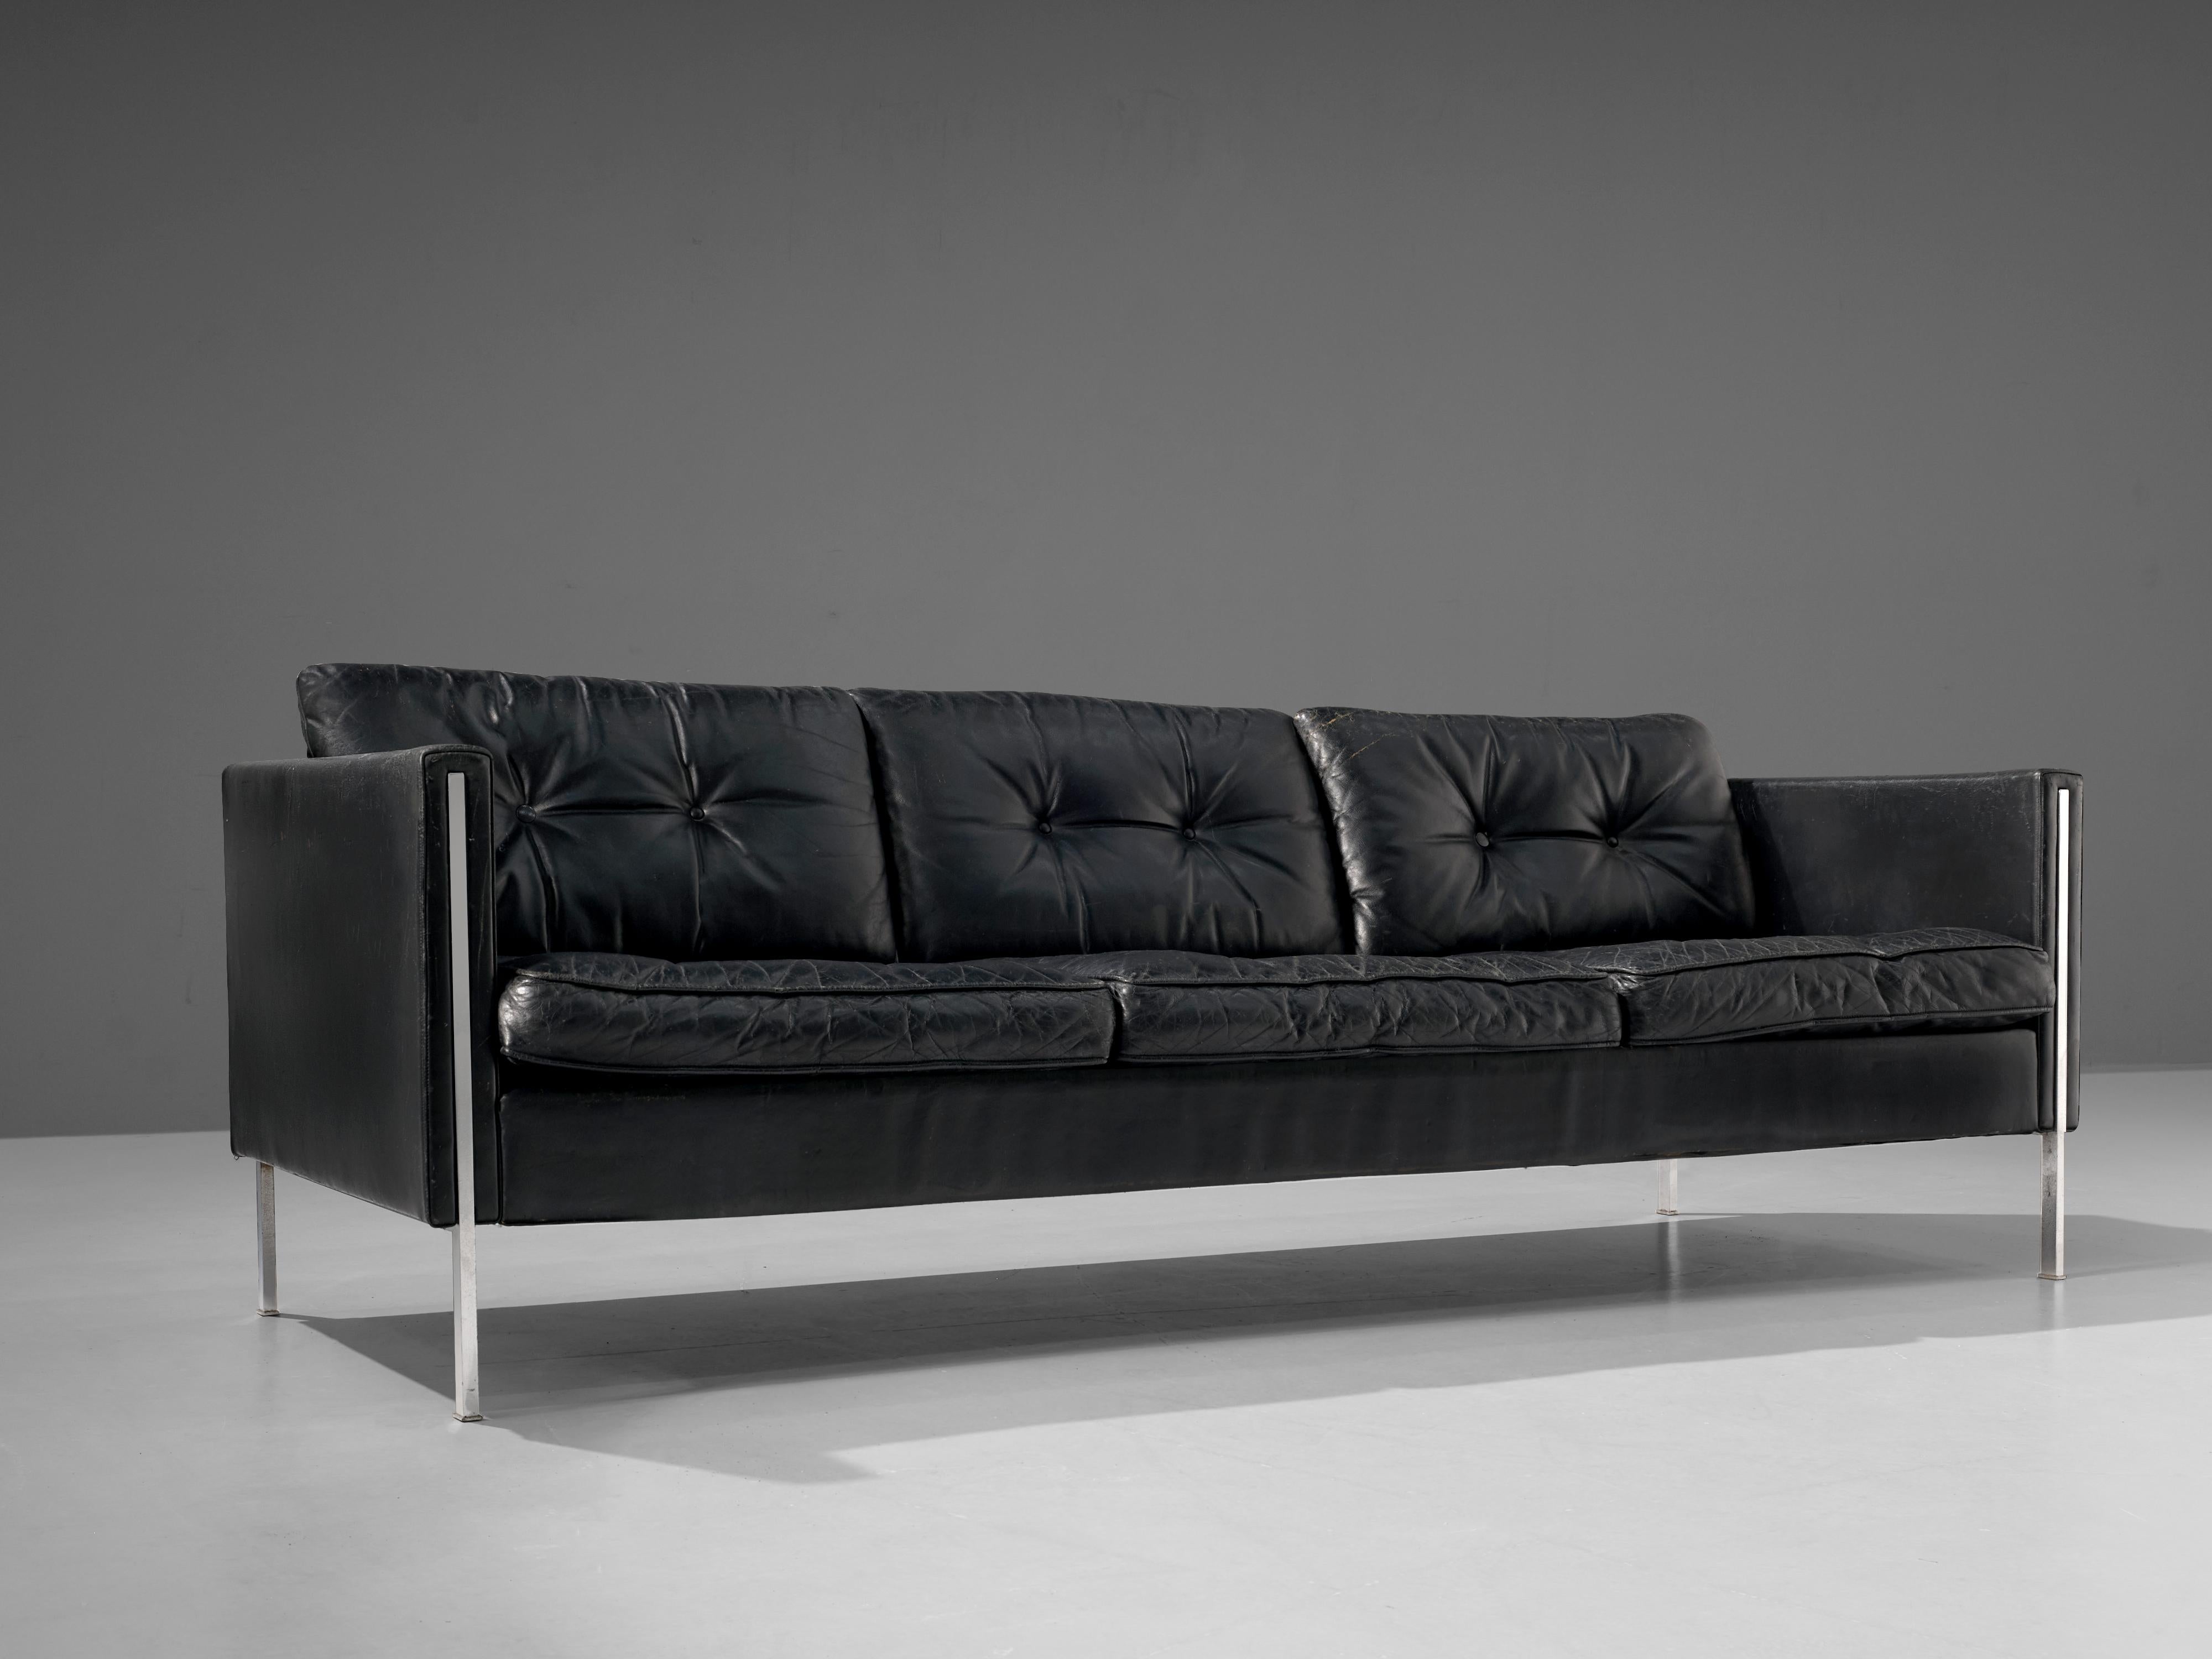 Steel Pierre Paulin for Artifort Sofa in Black Leather